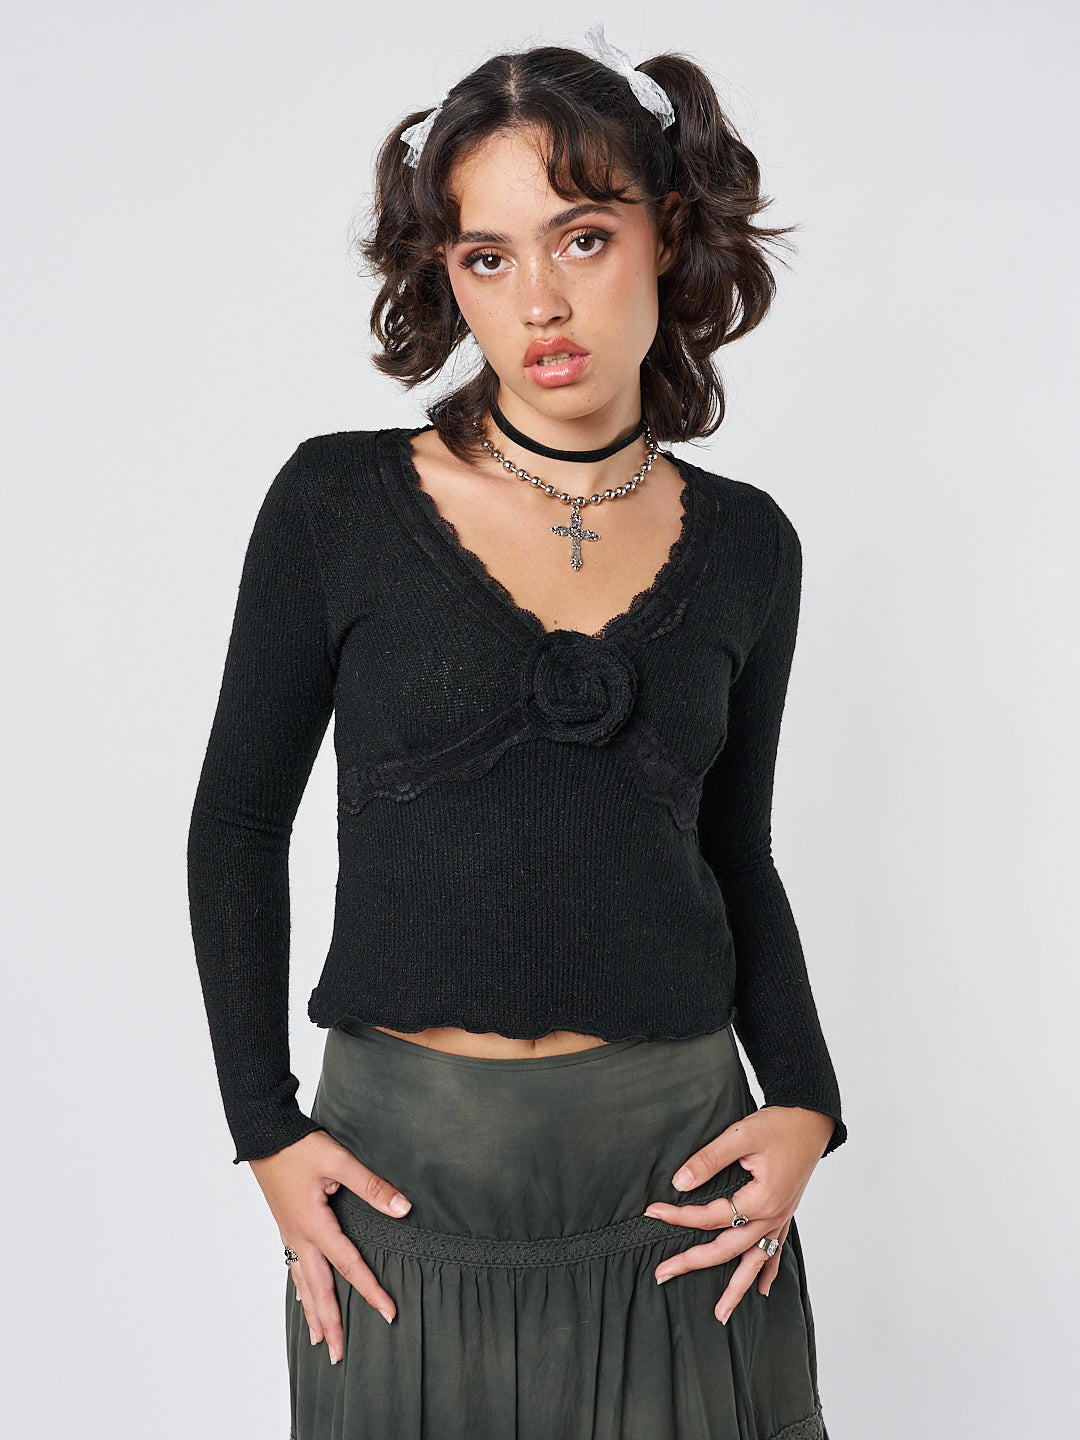 Ida Rose Black Knitted Top - Minga London